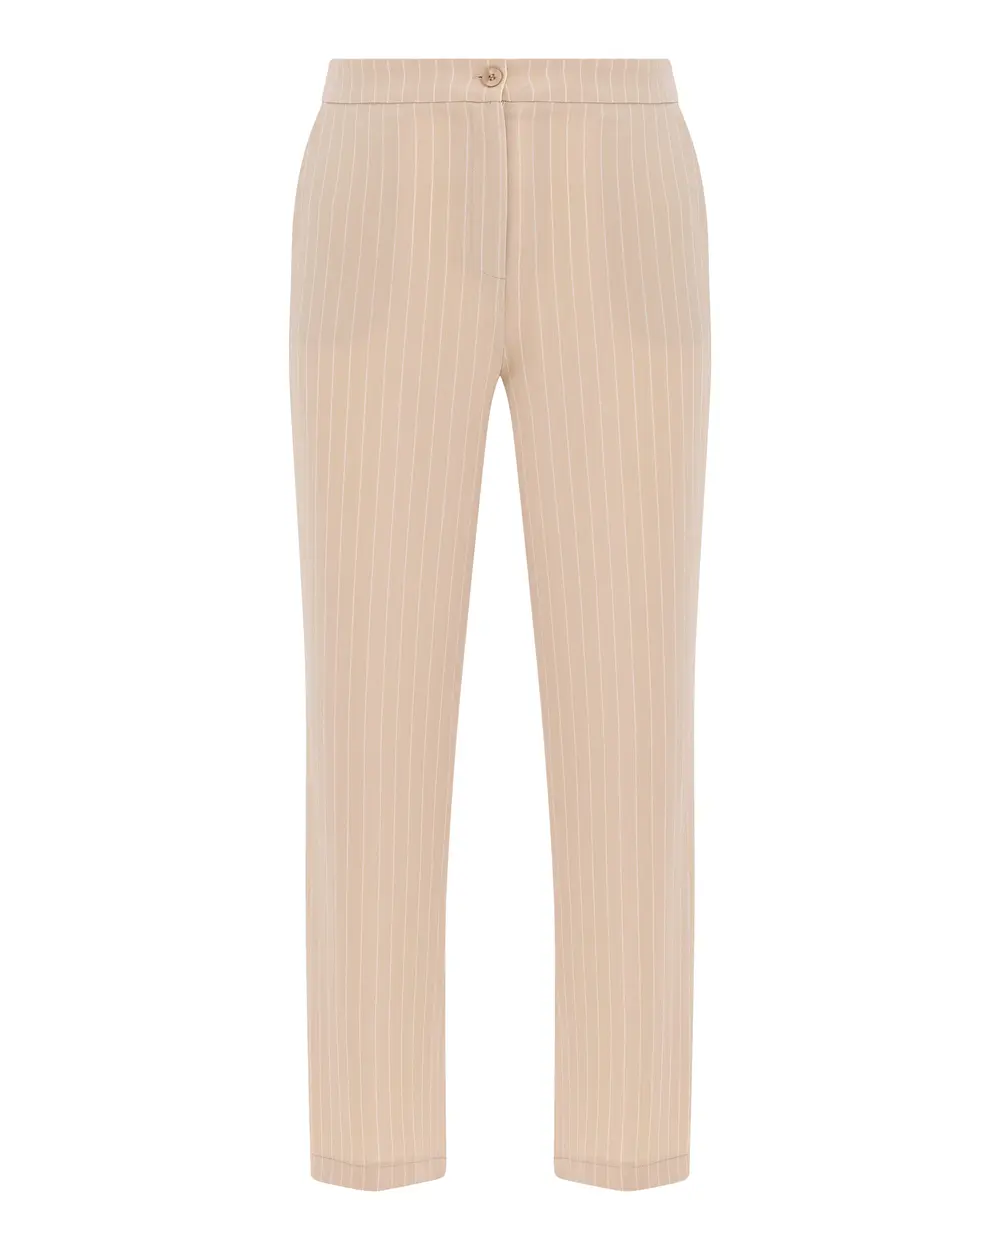 Plus Size Striped Zipper Detailed Pants